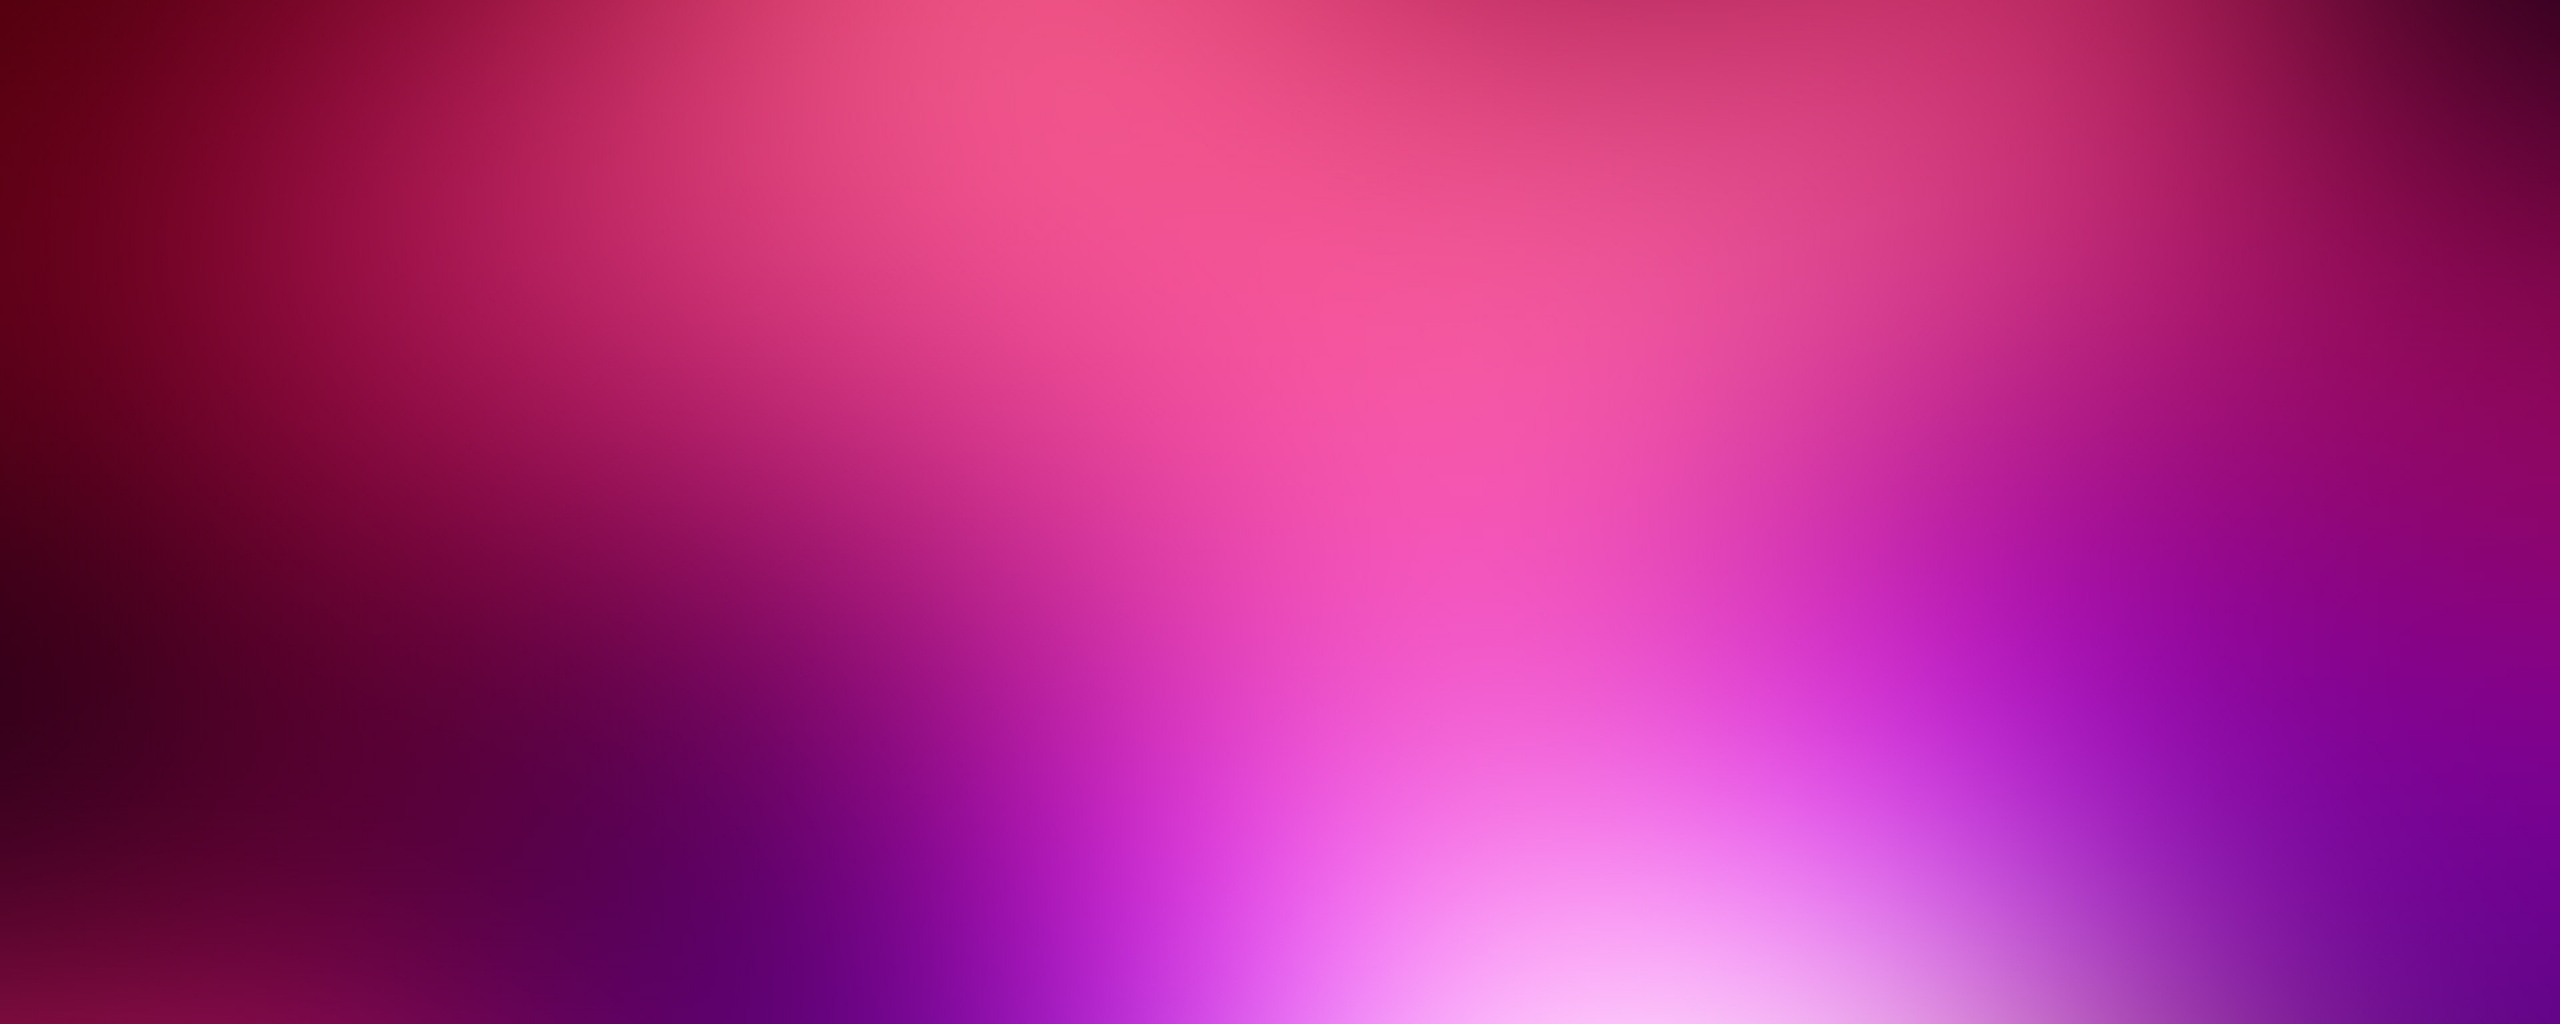 Wallpaper Pink Purple Light